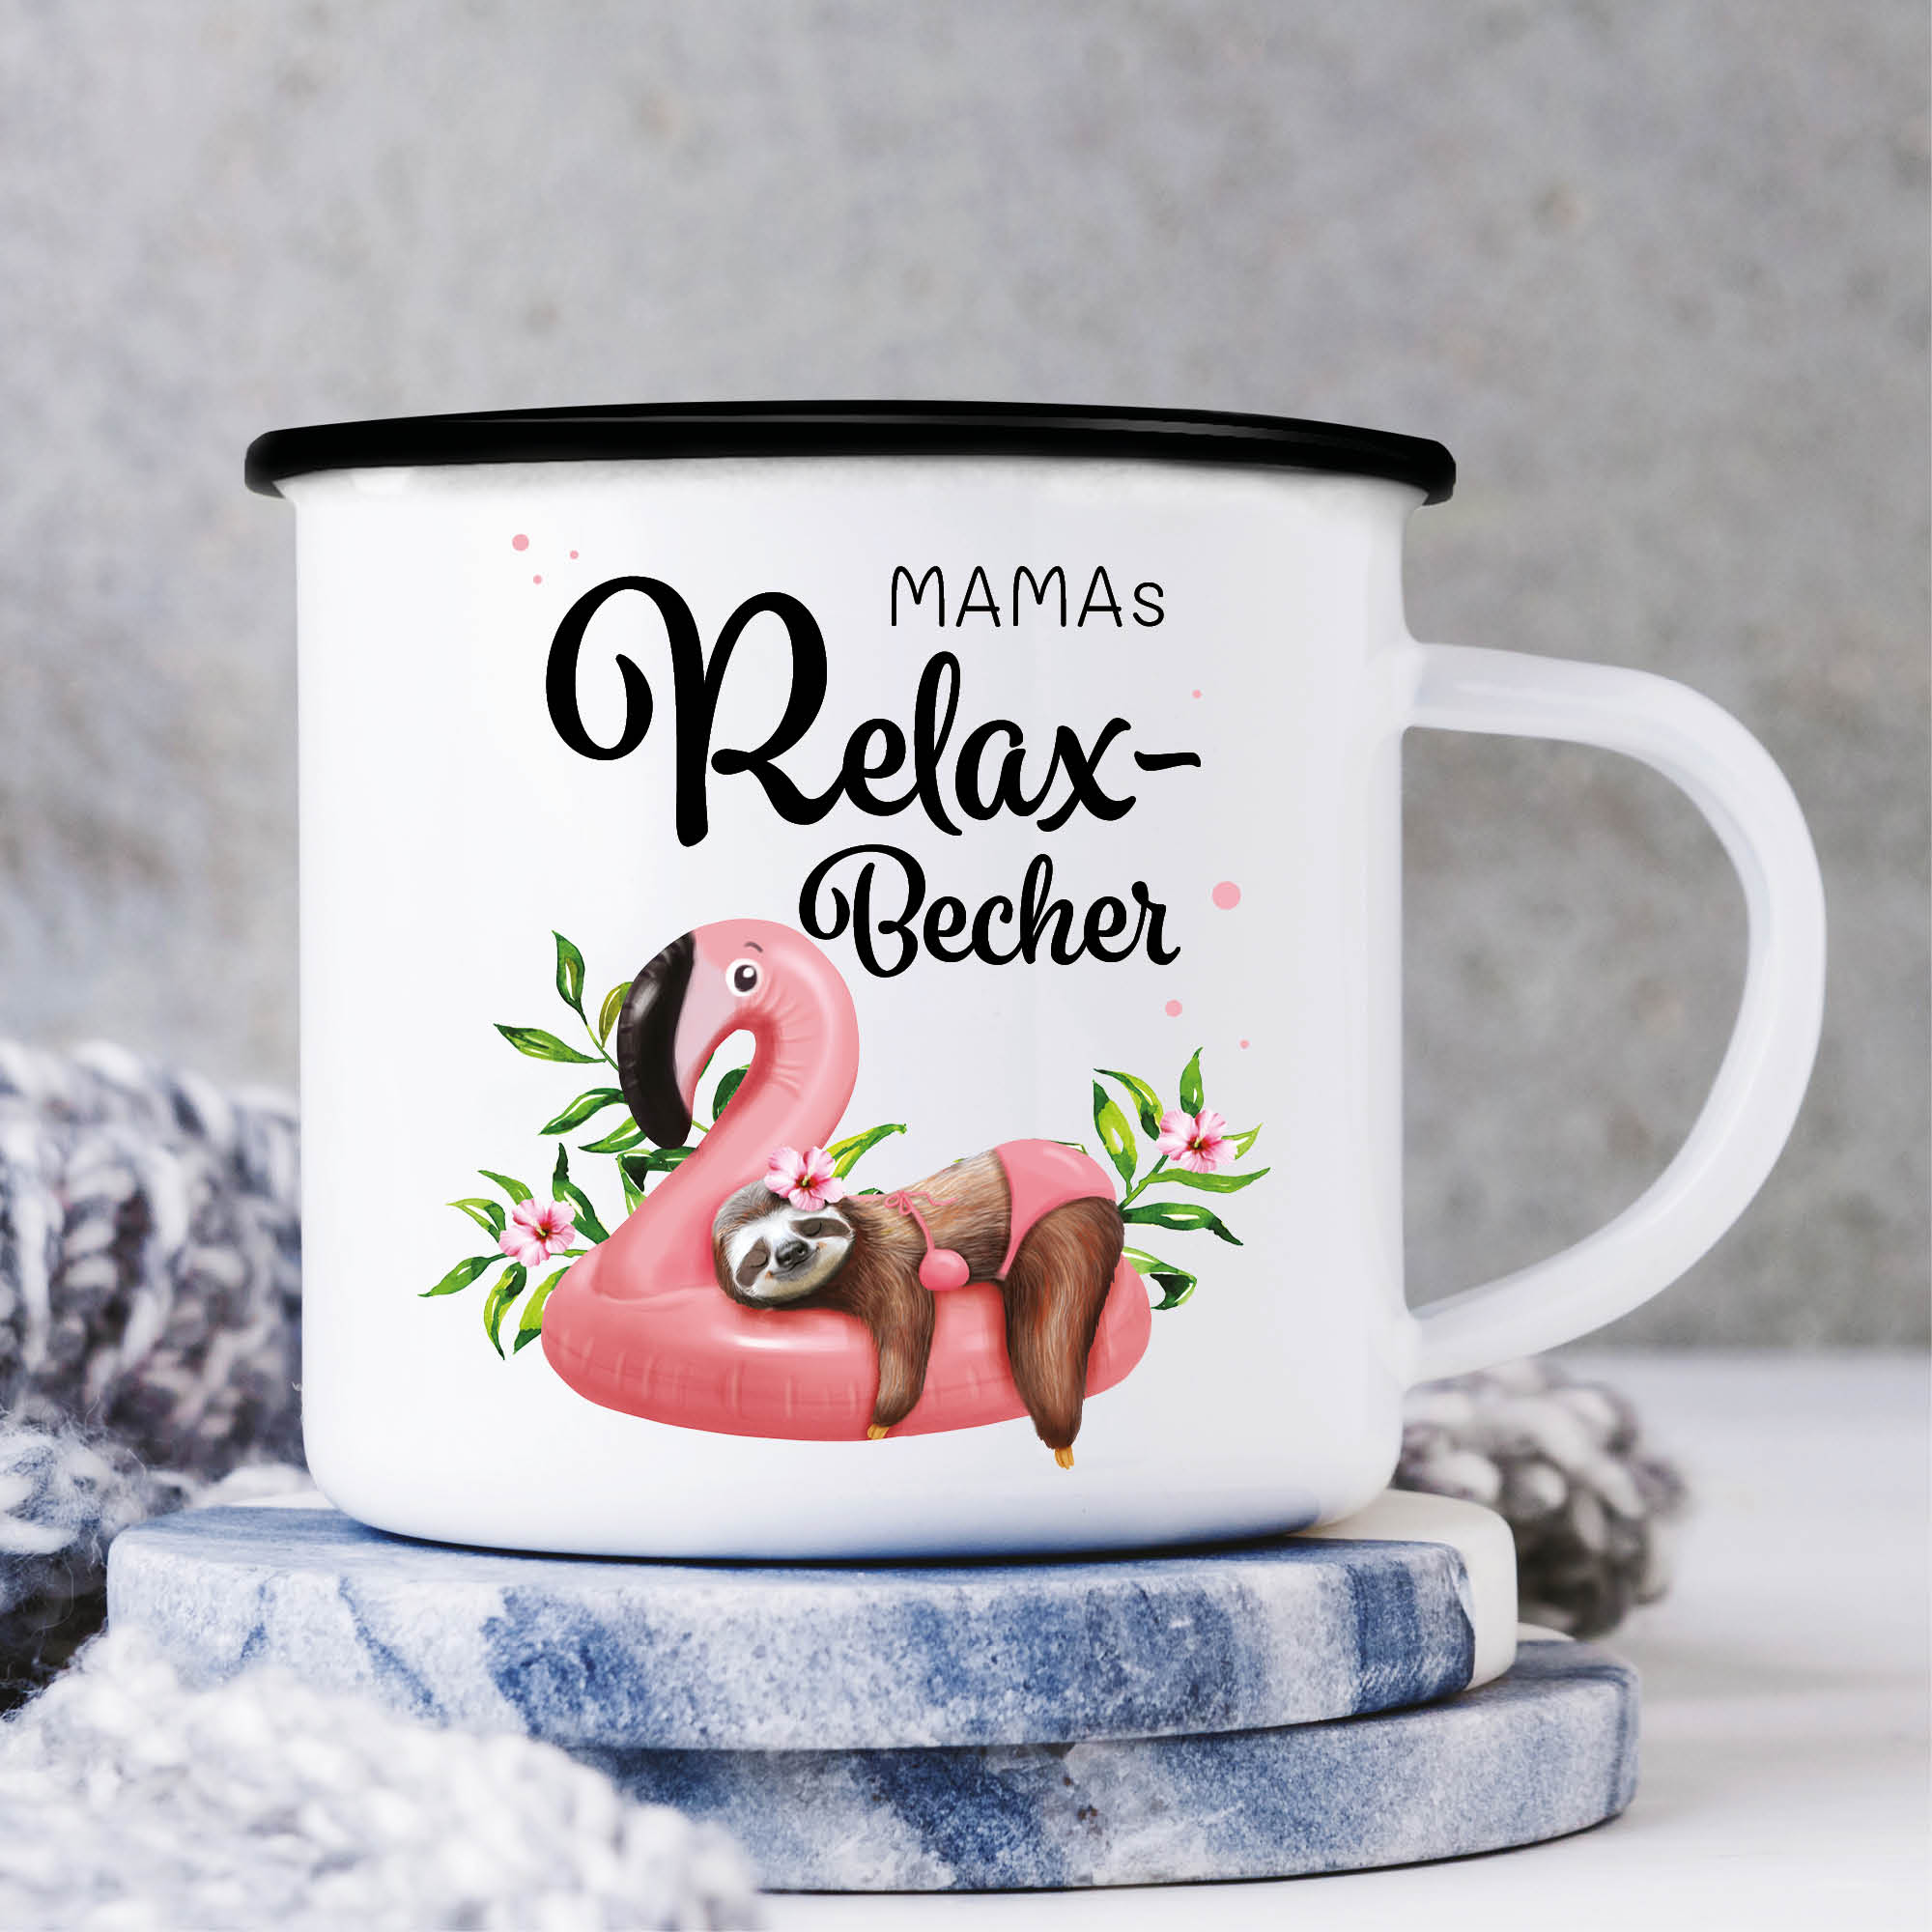 Emaille Campingbecher “Relax Becher” mit Wunschnamen Faultier auf Flamingo